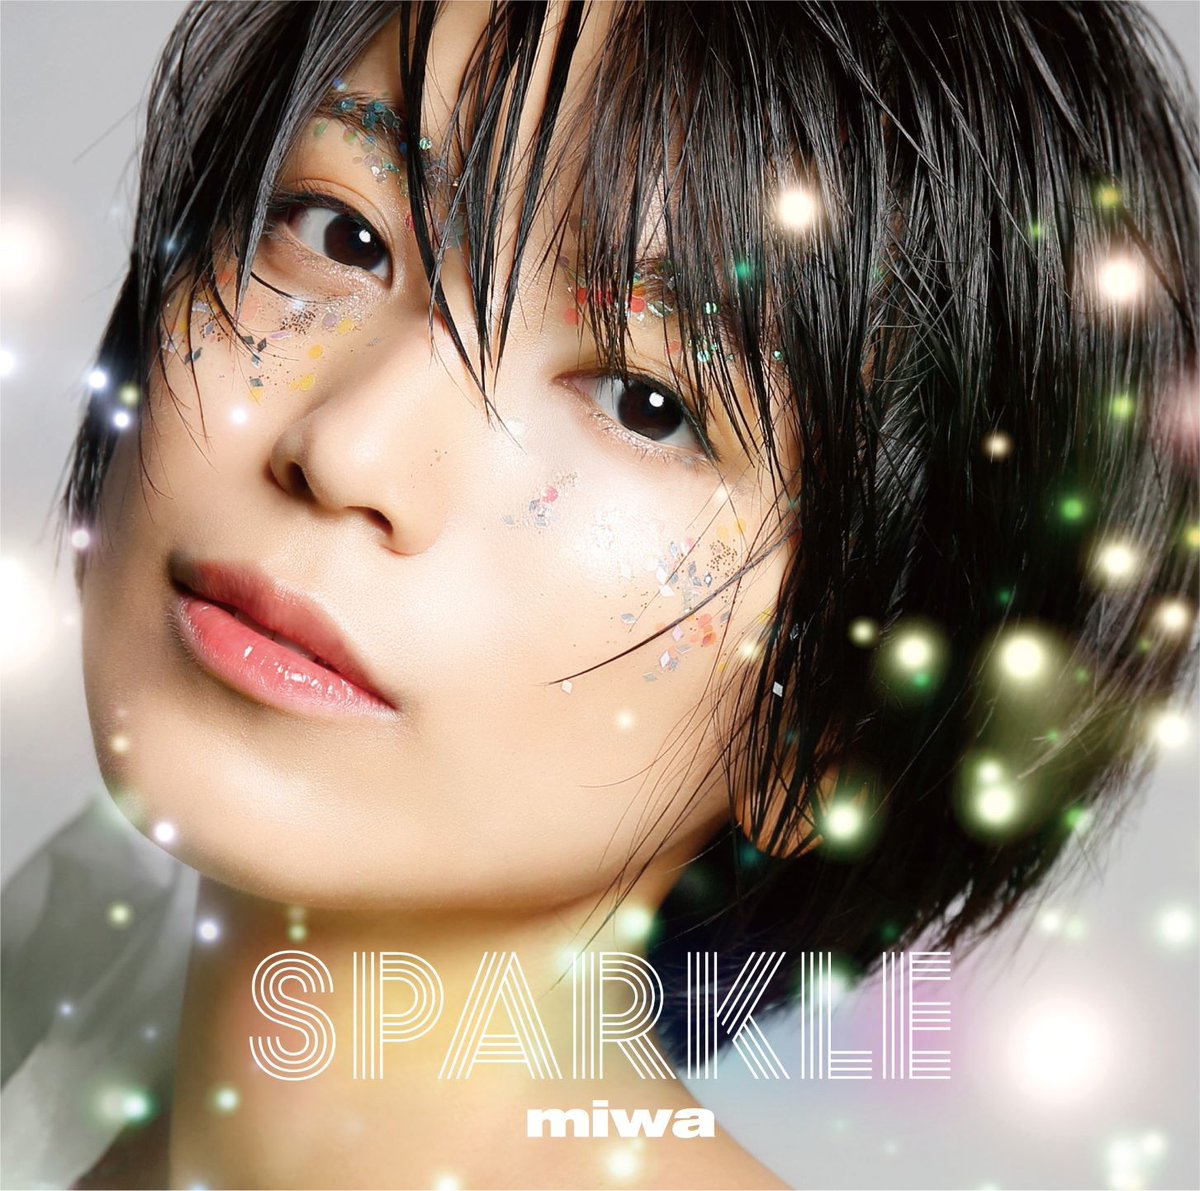 『miwa - 君の声が』収録の『Sparkle』ジャケット